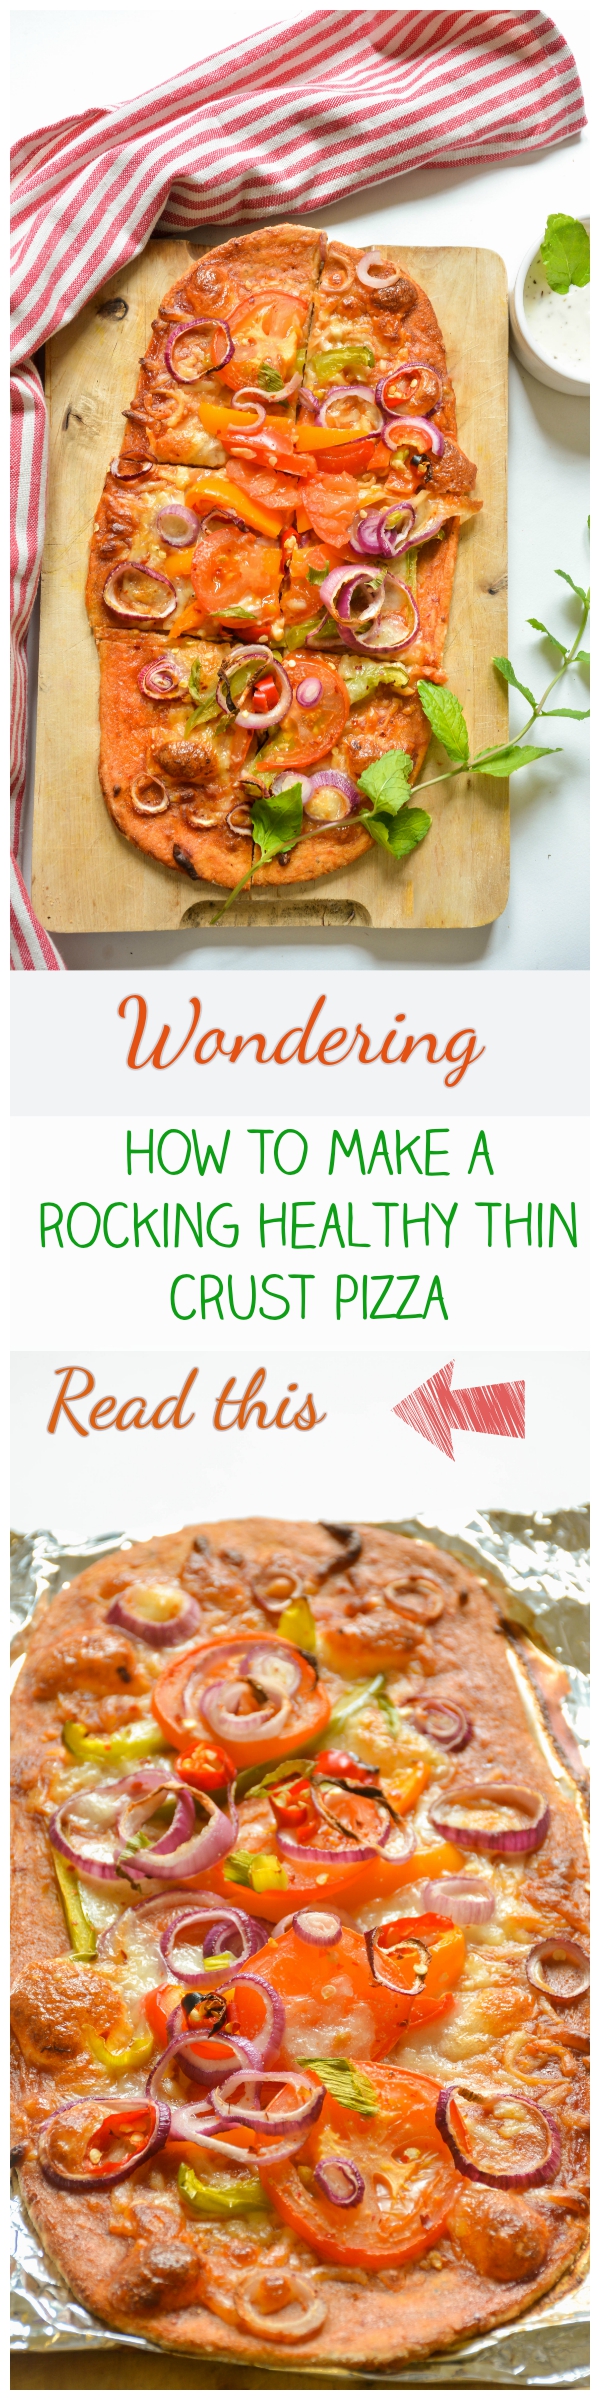 Crispy Thin crust pizza